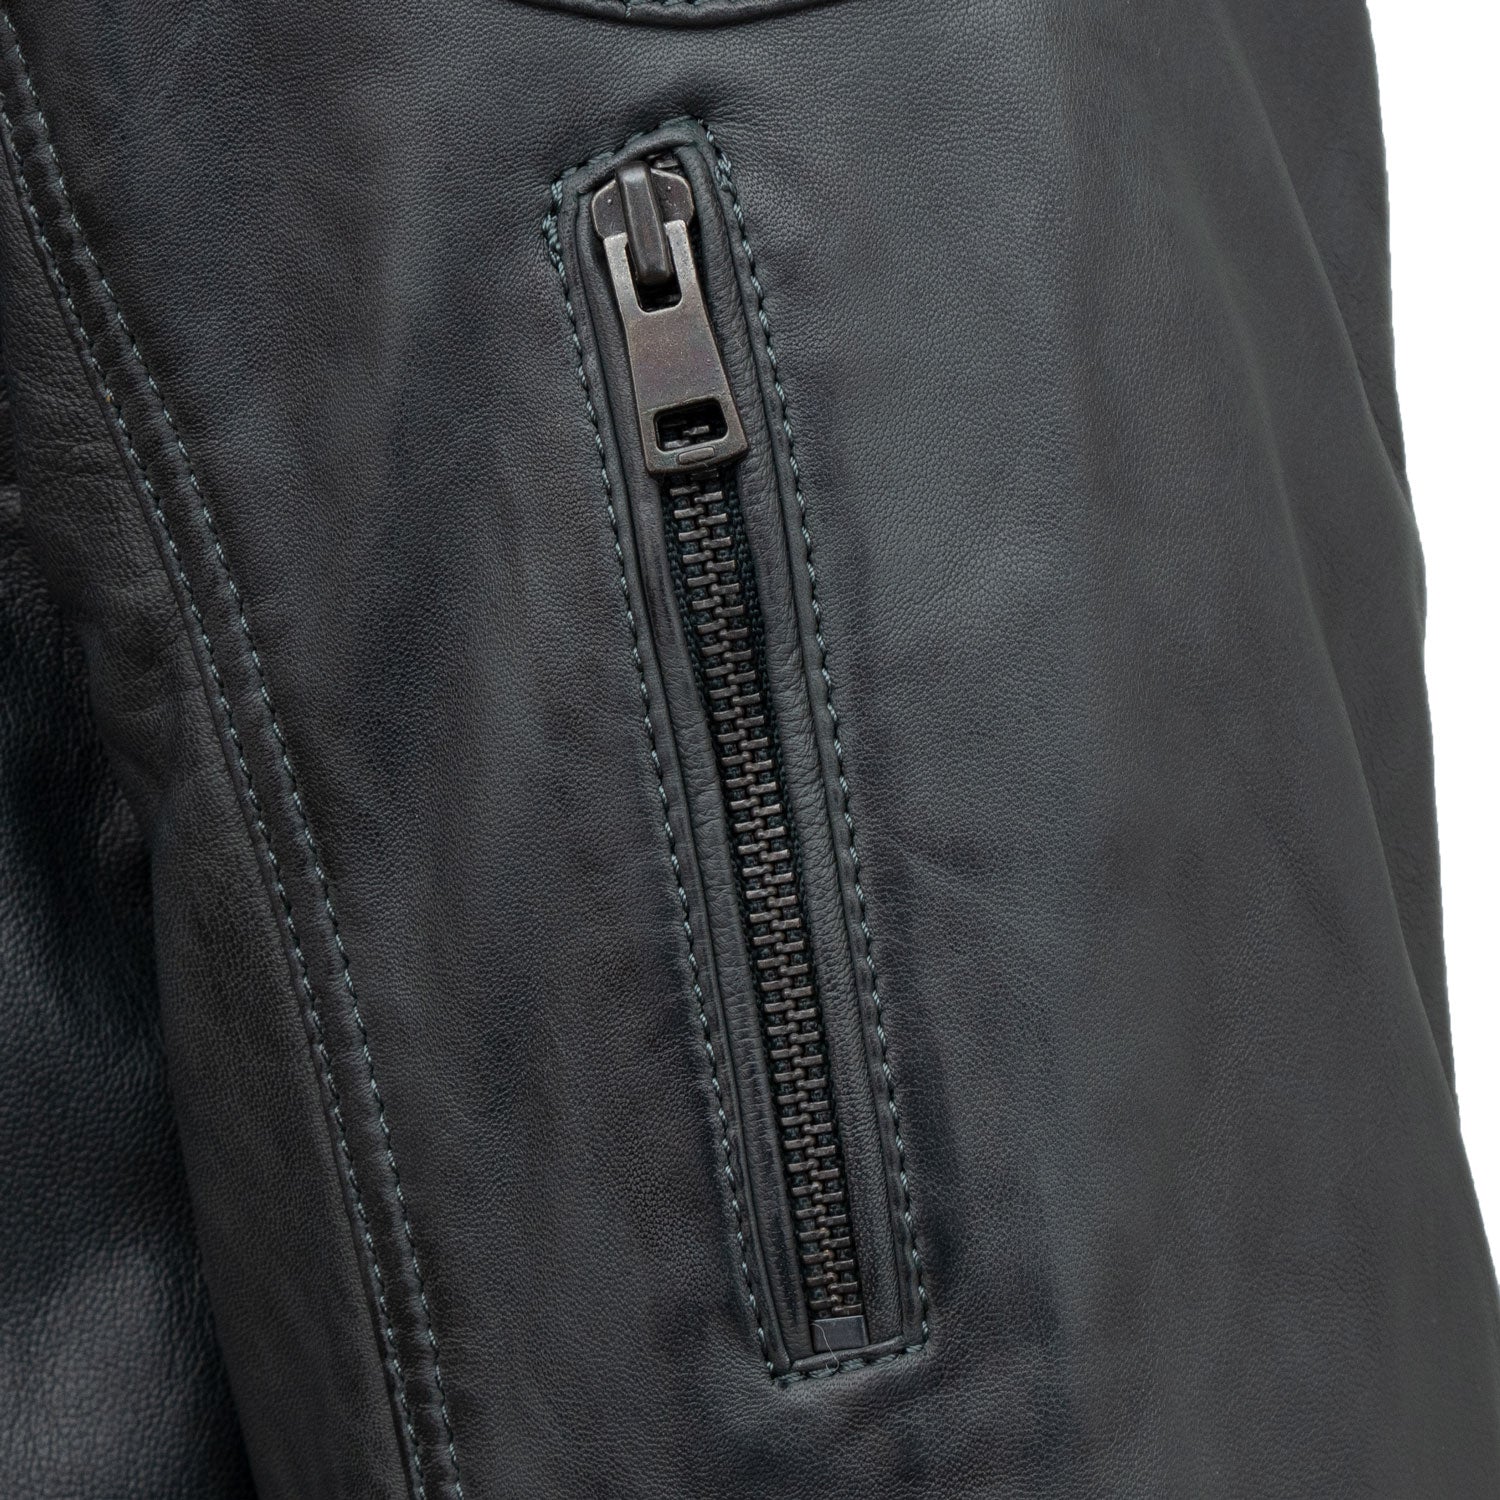 Mac: Men's Grey Leather Jacket